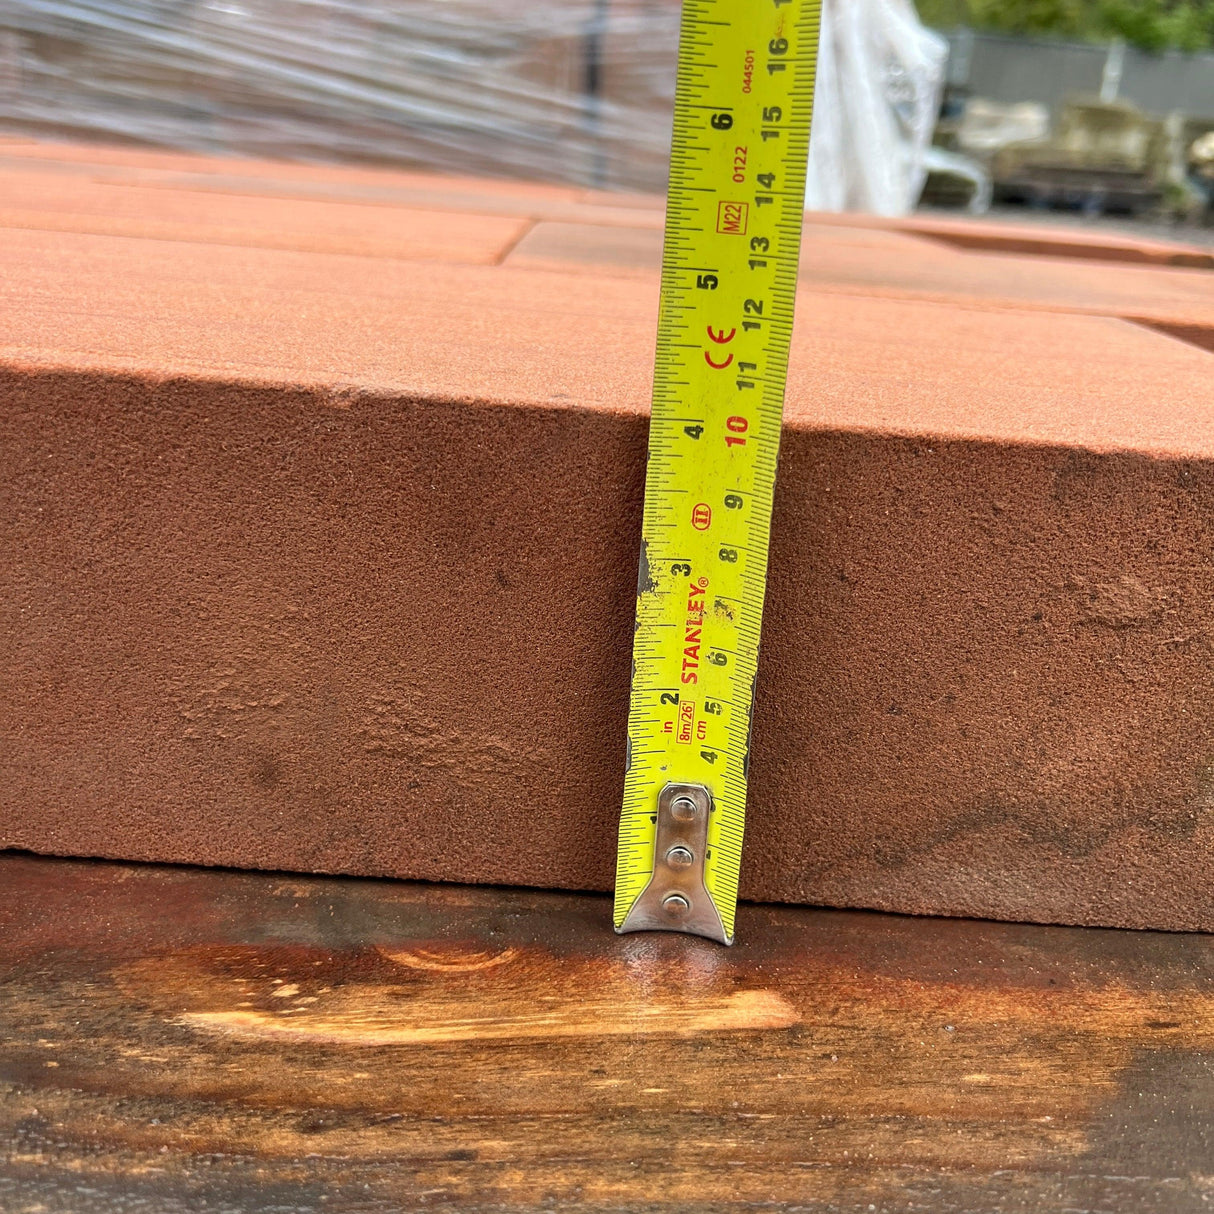 100mm Reclaimed Ashlar Runcorn Sand Stone - Reclaimed Brick Company